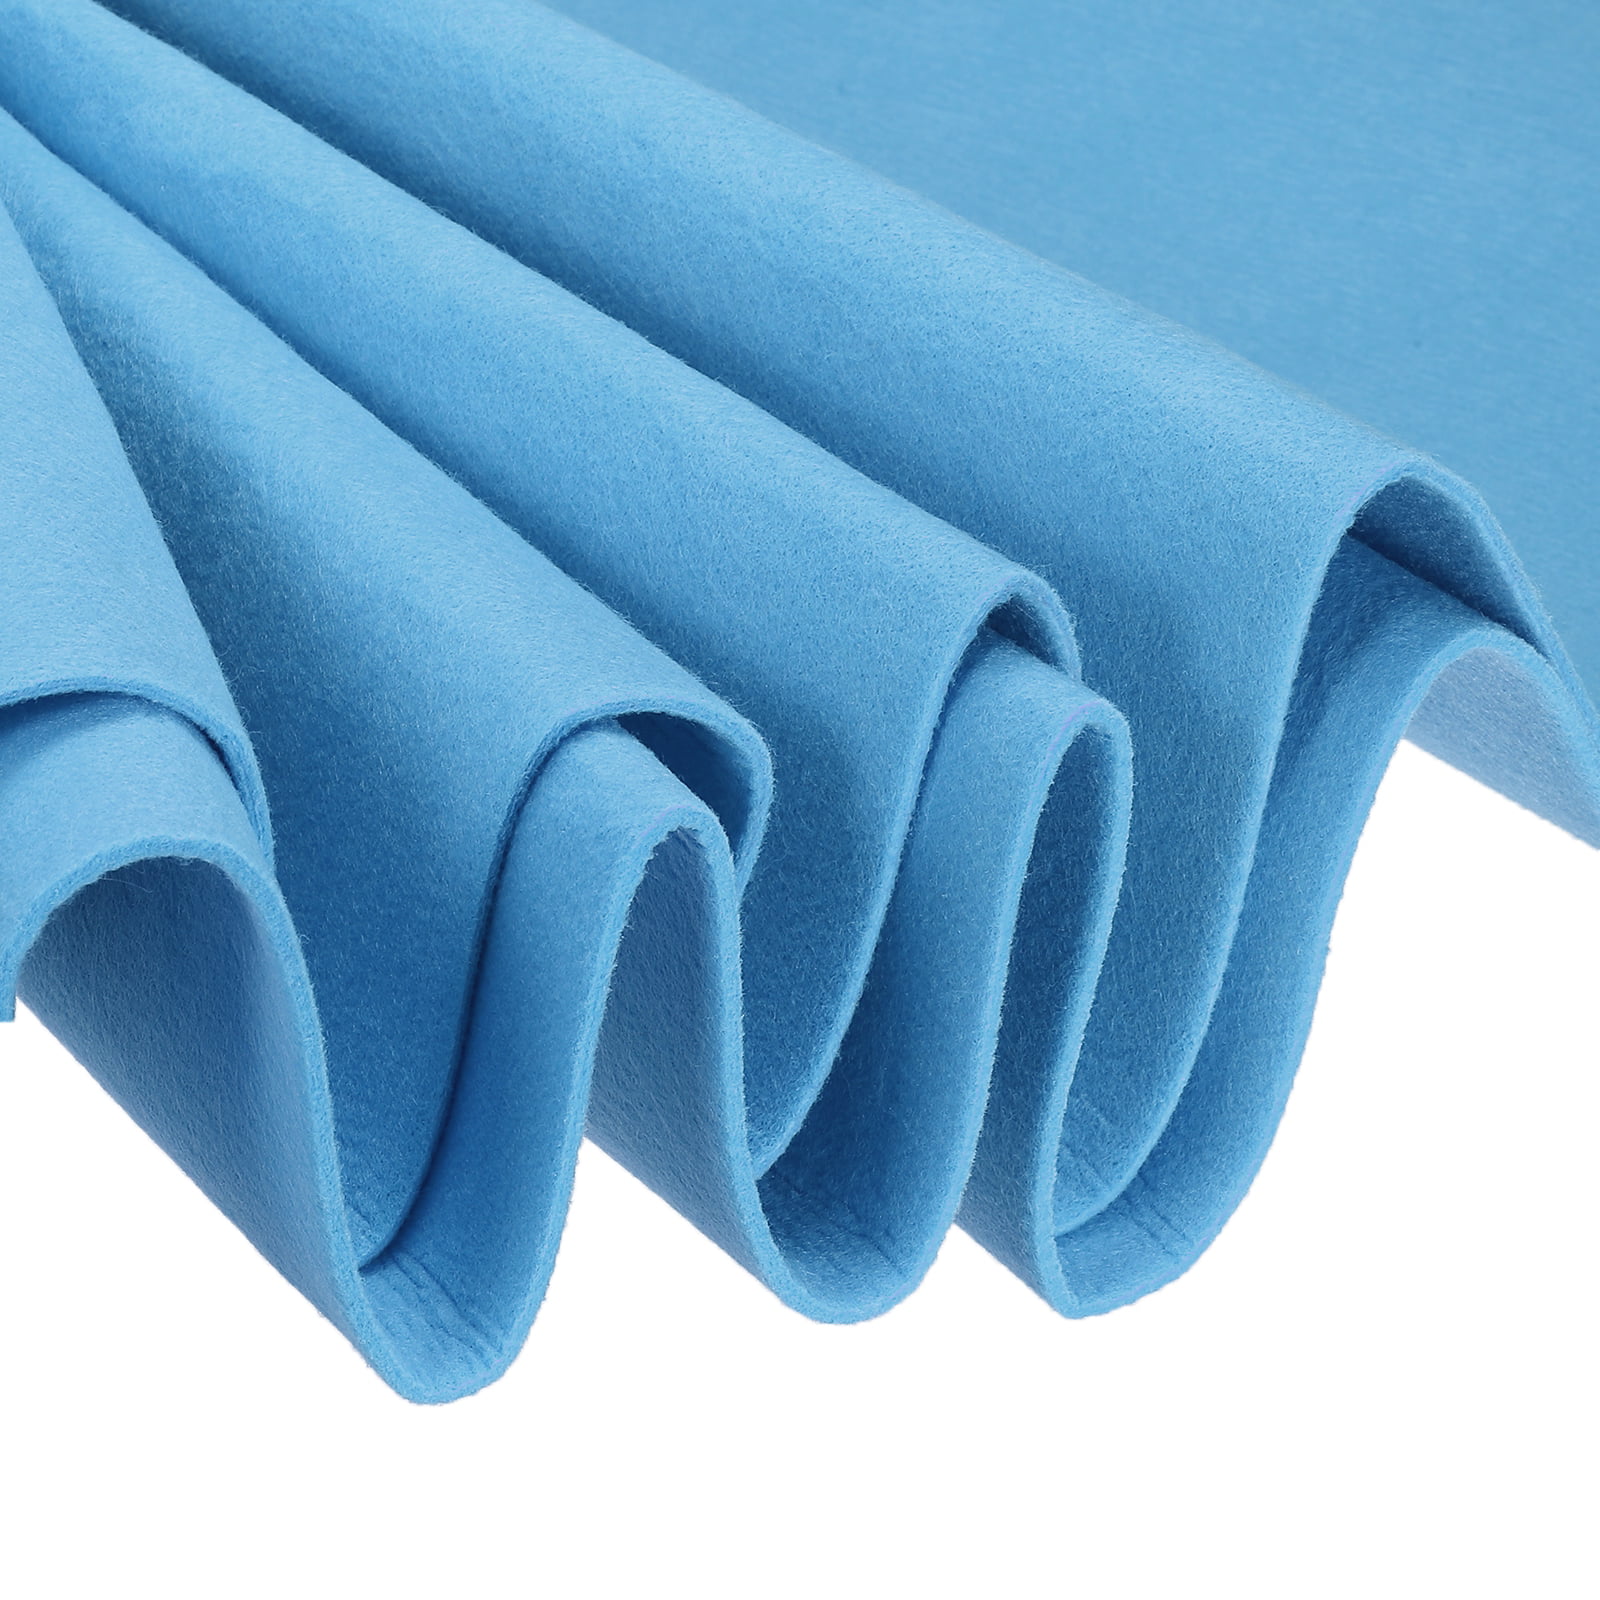 Uxcell Acrylic Soft Felt Fabric Sheets Fiber Sheets Light Sky Blue 39x39 inch 2mm Thick